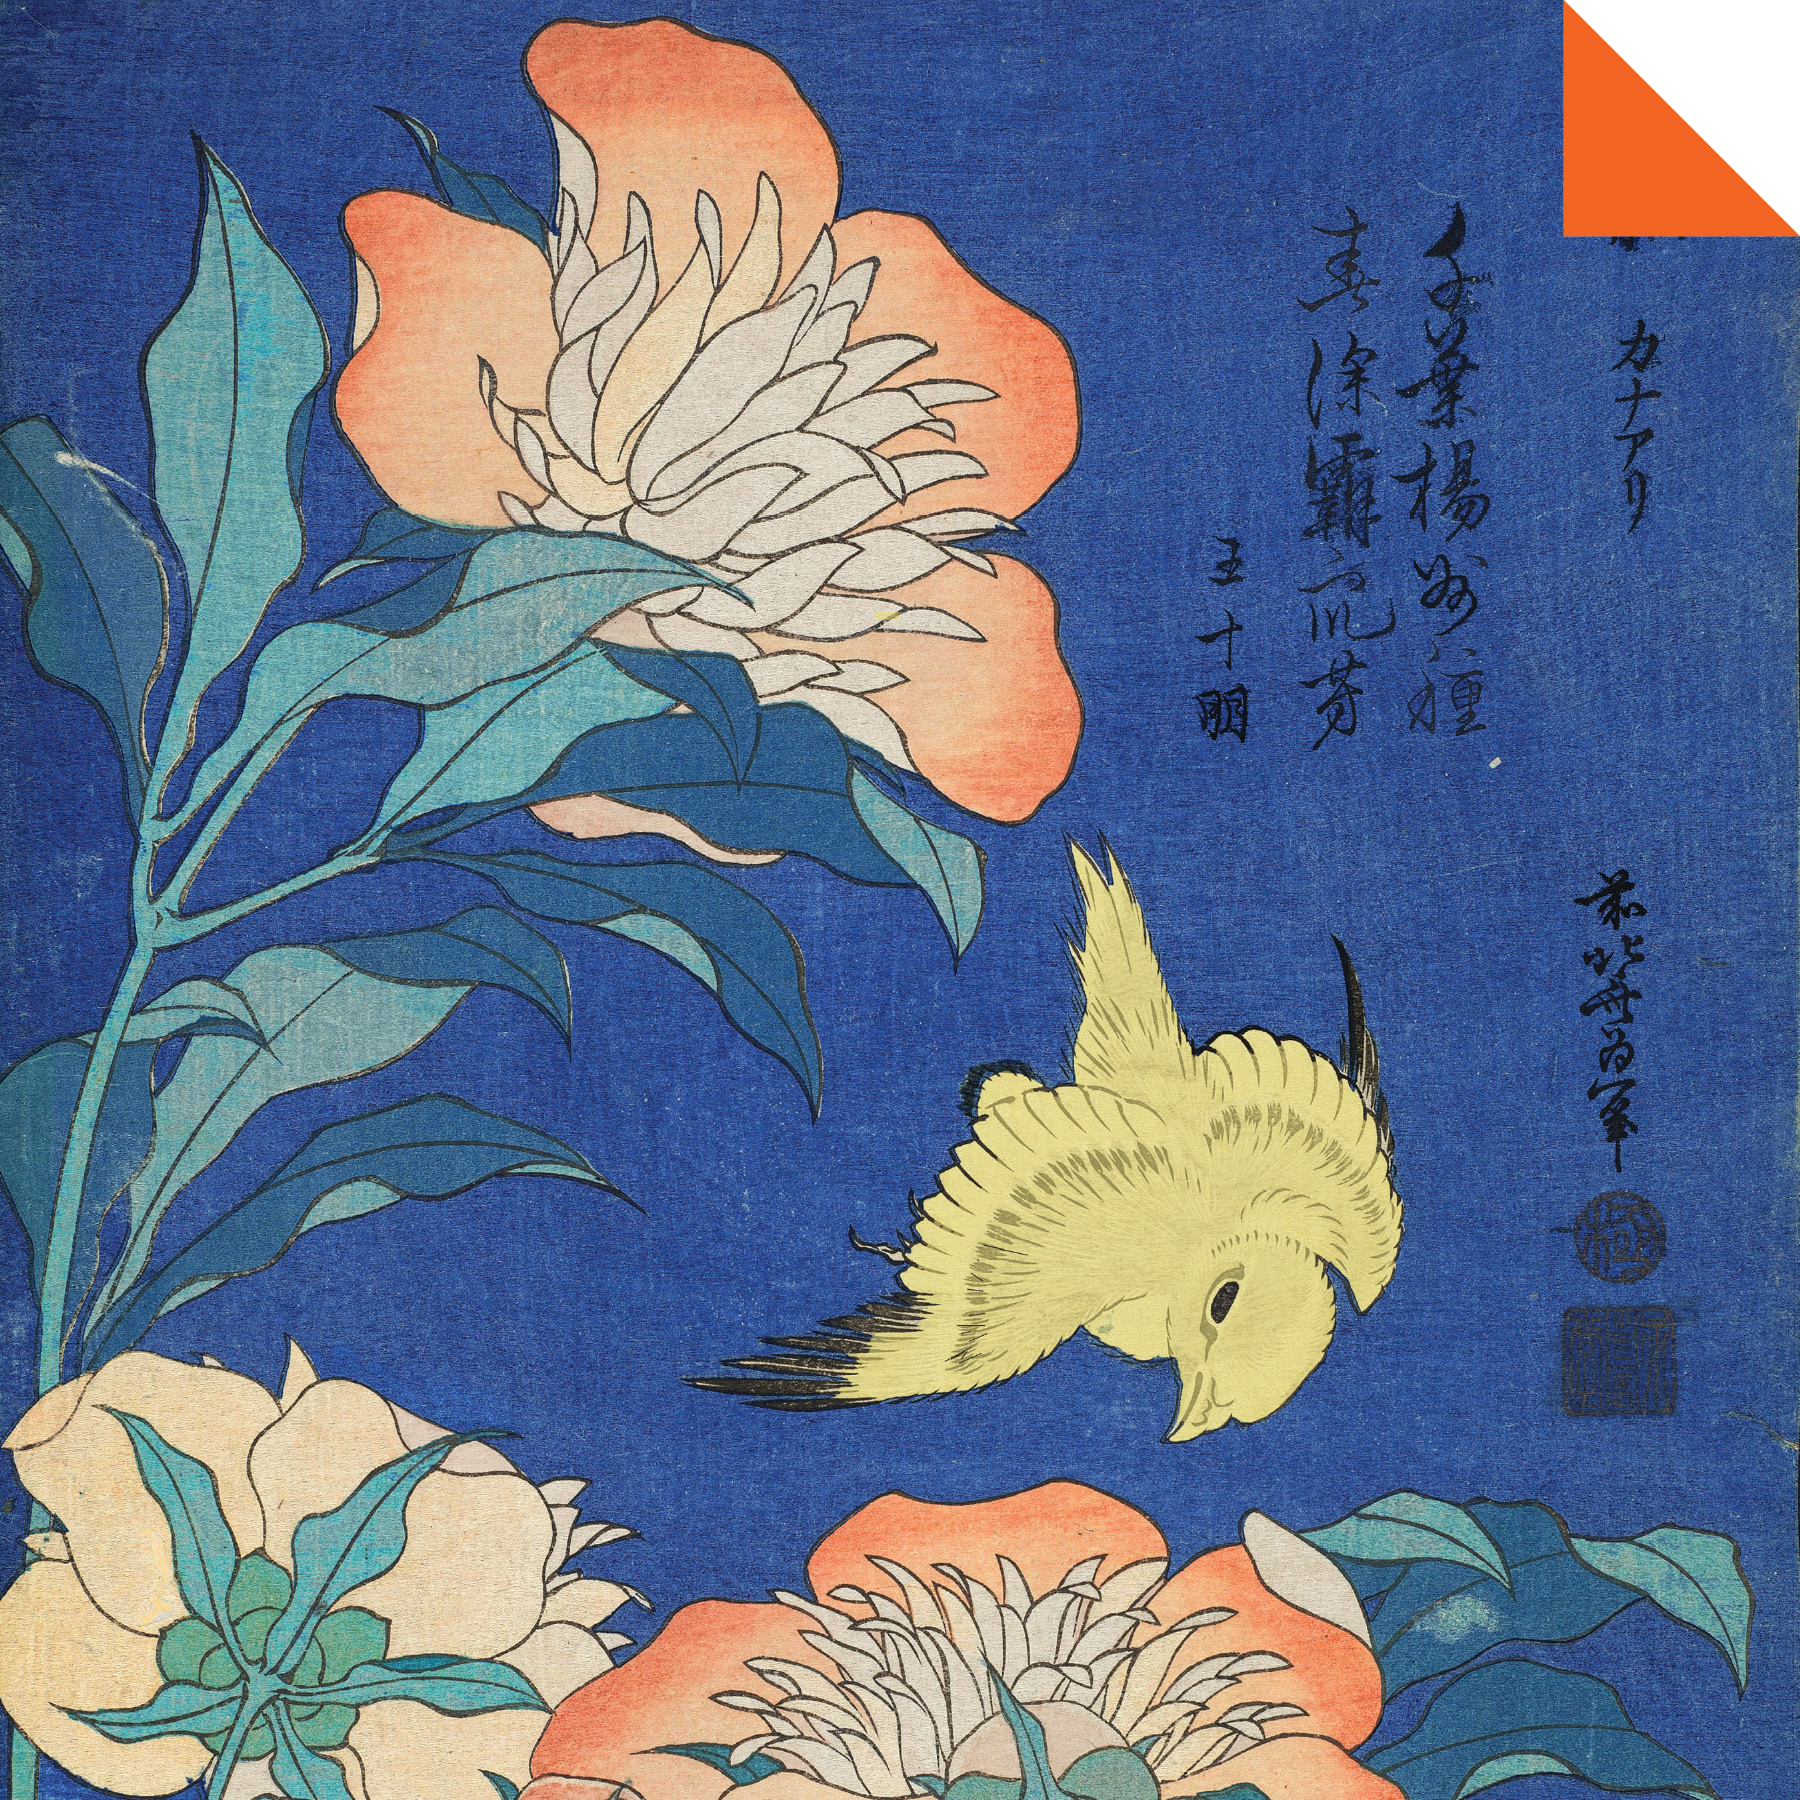 Origami Paper 200 sheets Hokusai Prints 6 (15 cm)